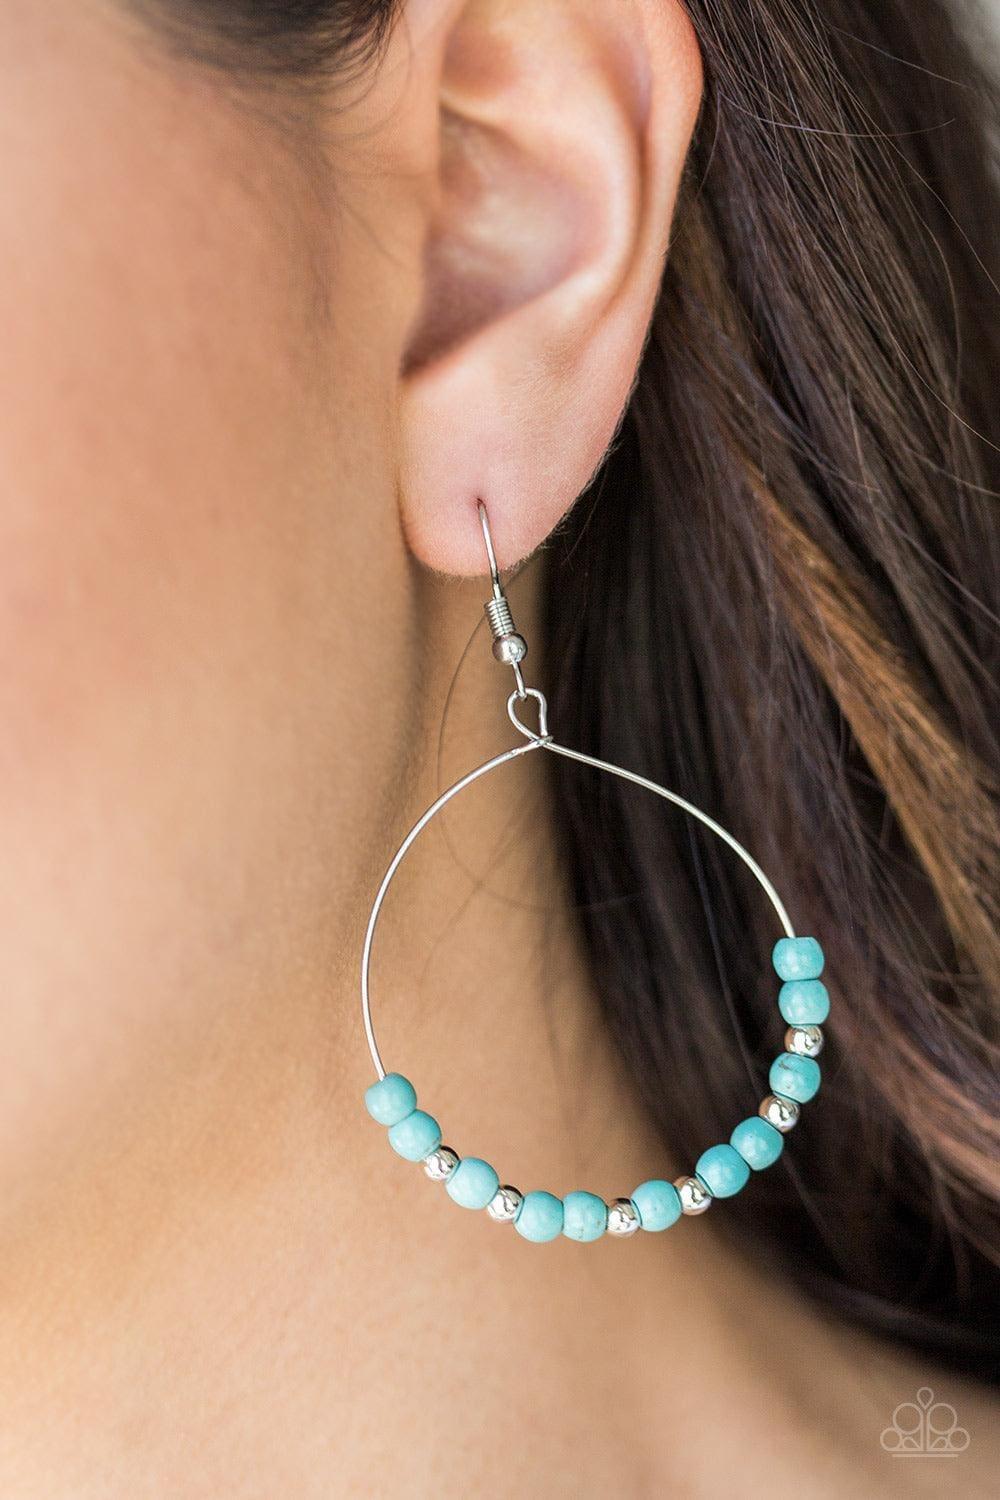 Paparazzi Accessories - Stone Spa - Blue Earrings - Bling by JessieK